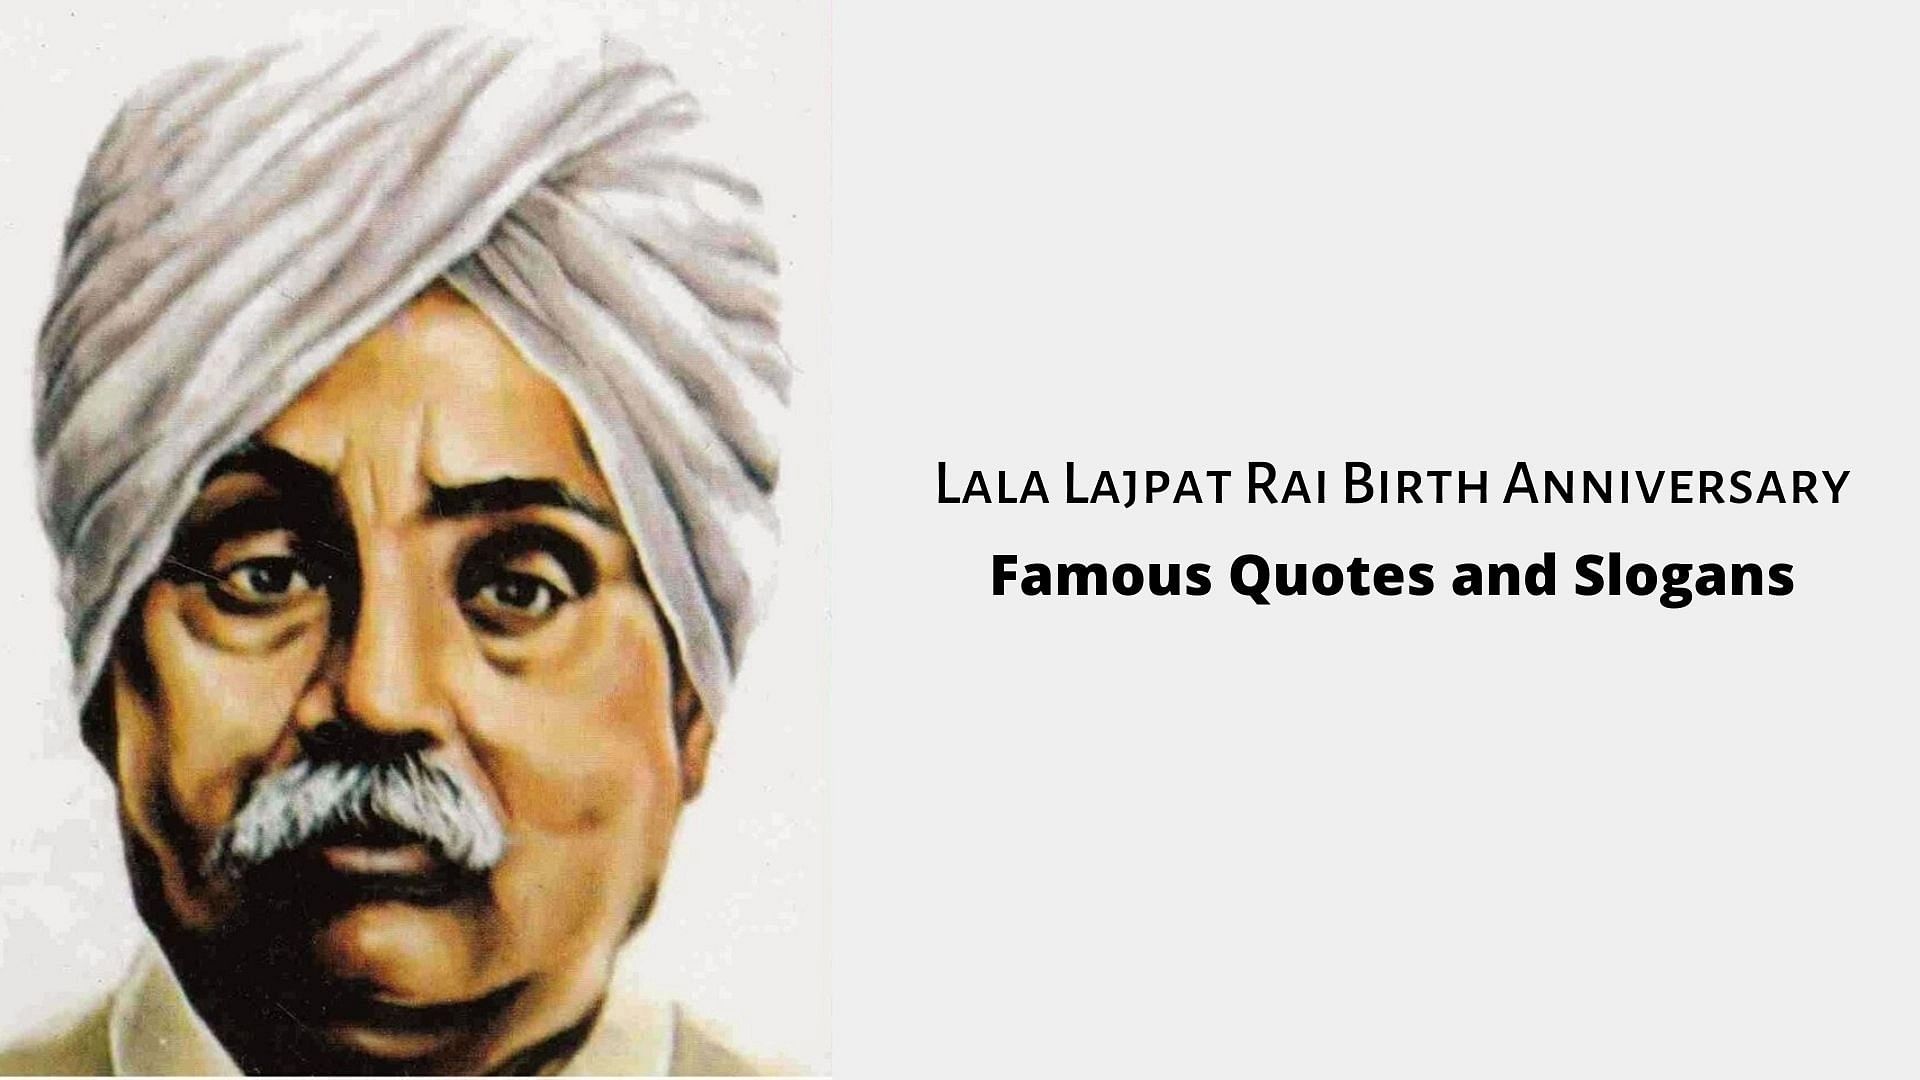 <div class="paragraphs"><p>Lala Lajpat Rai's birth anniversary is on 28 January.</p></div>